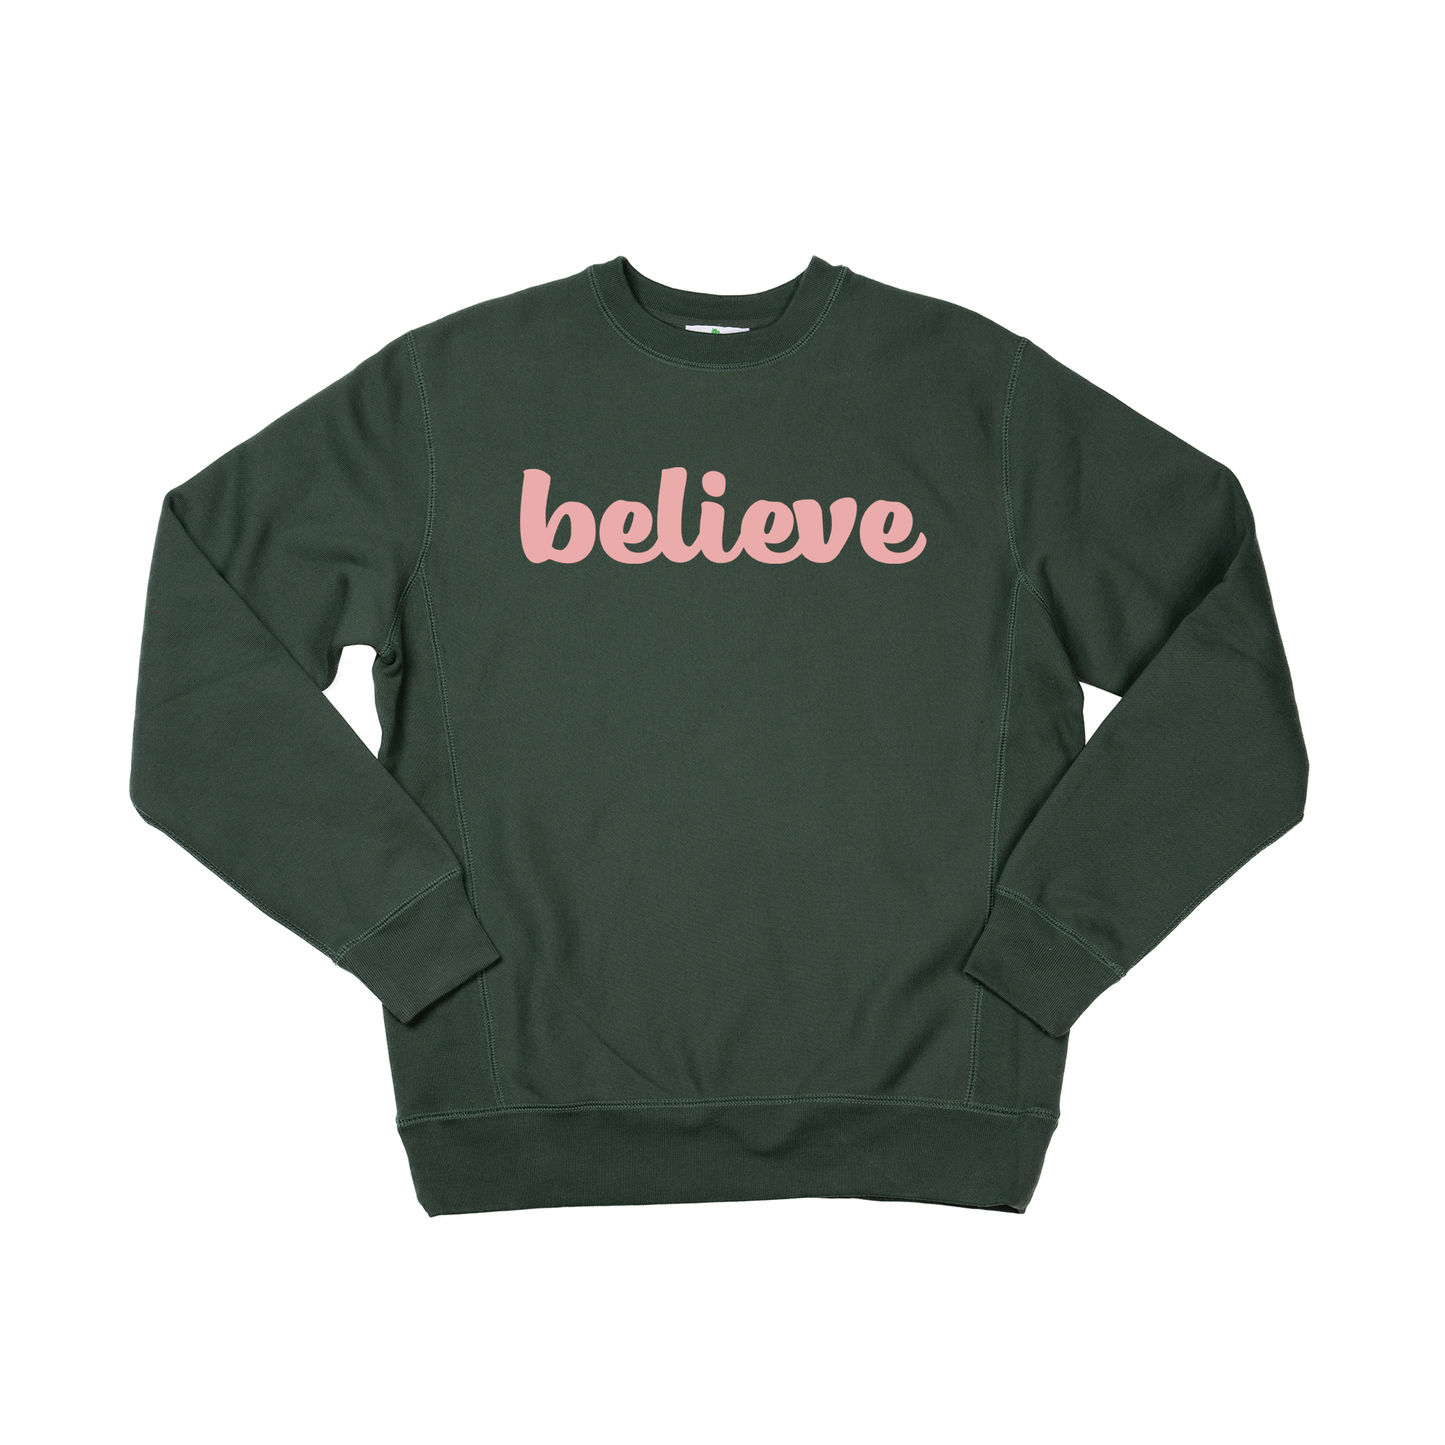 Believe (Thick Cursive, Pink) - Heavyweight Sweatshirt (Pine)